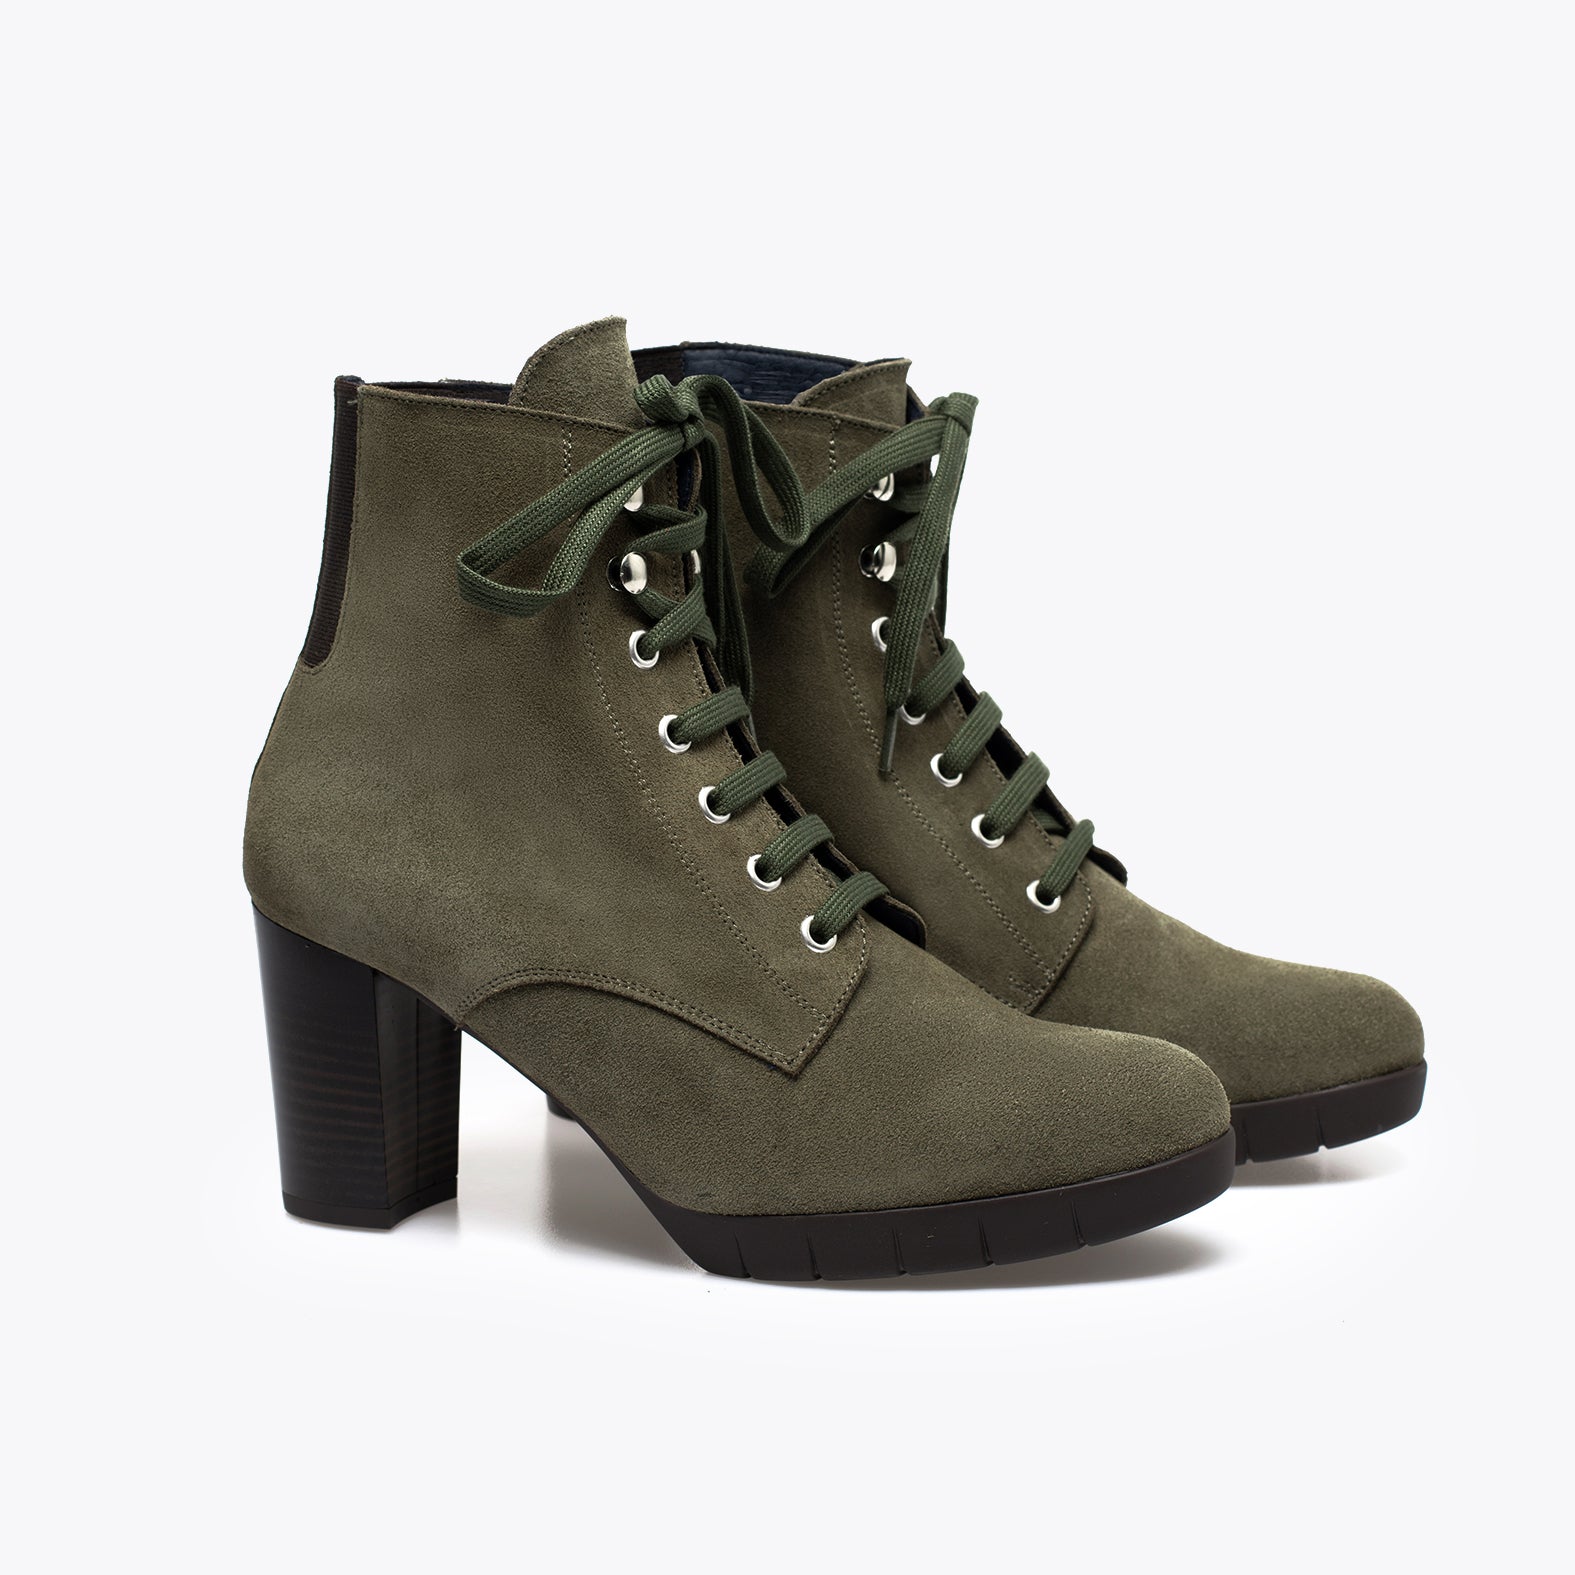 SKINNY - GREEN high heel ankle boot